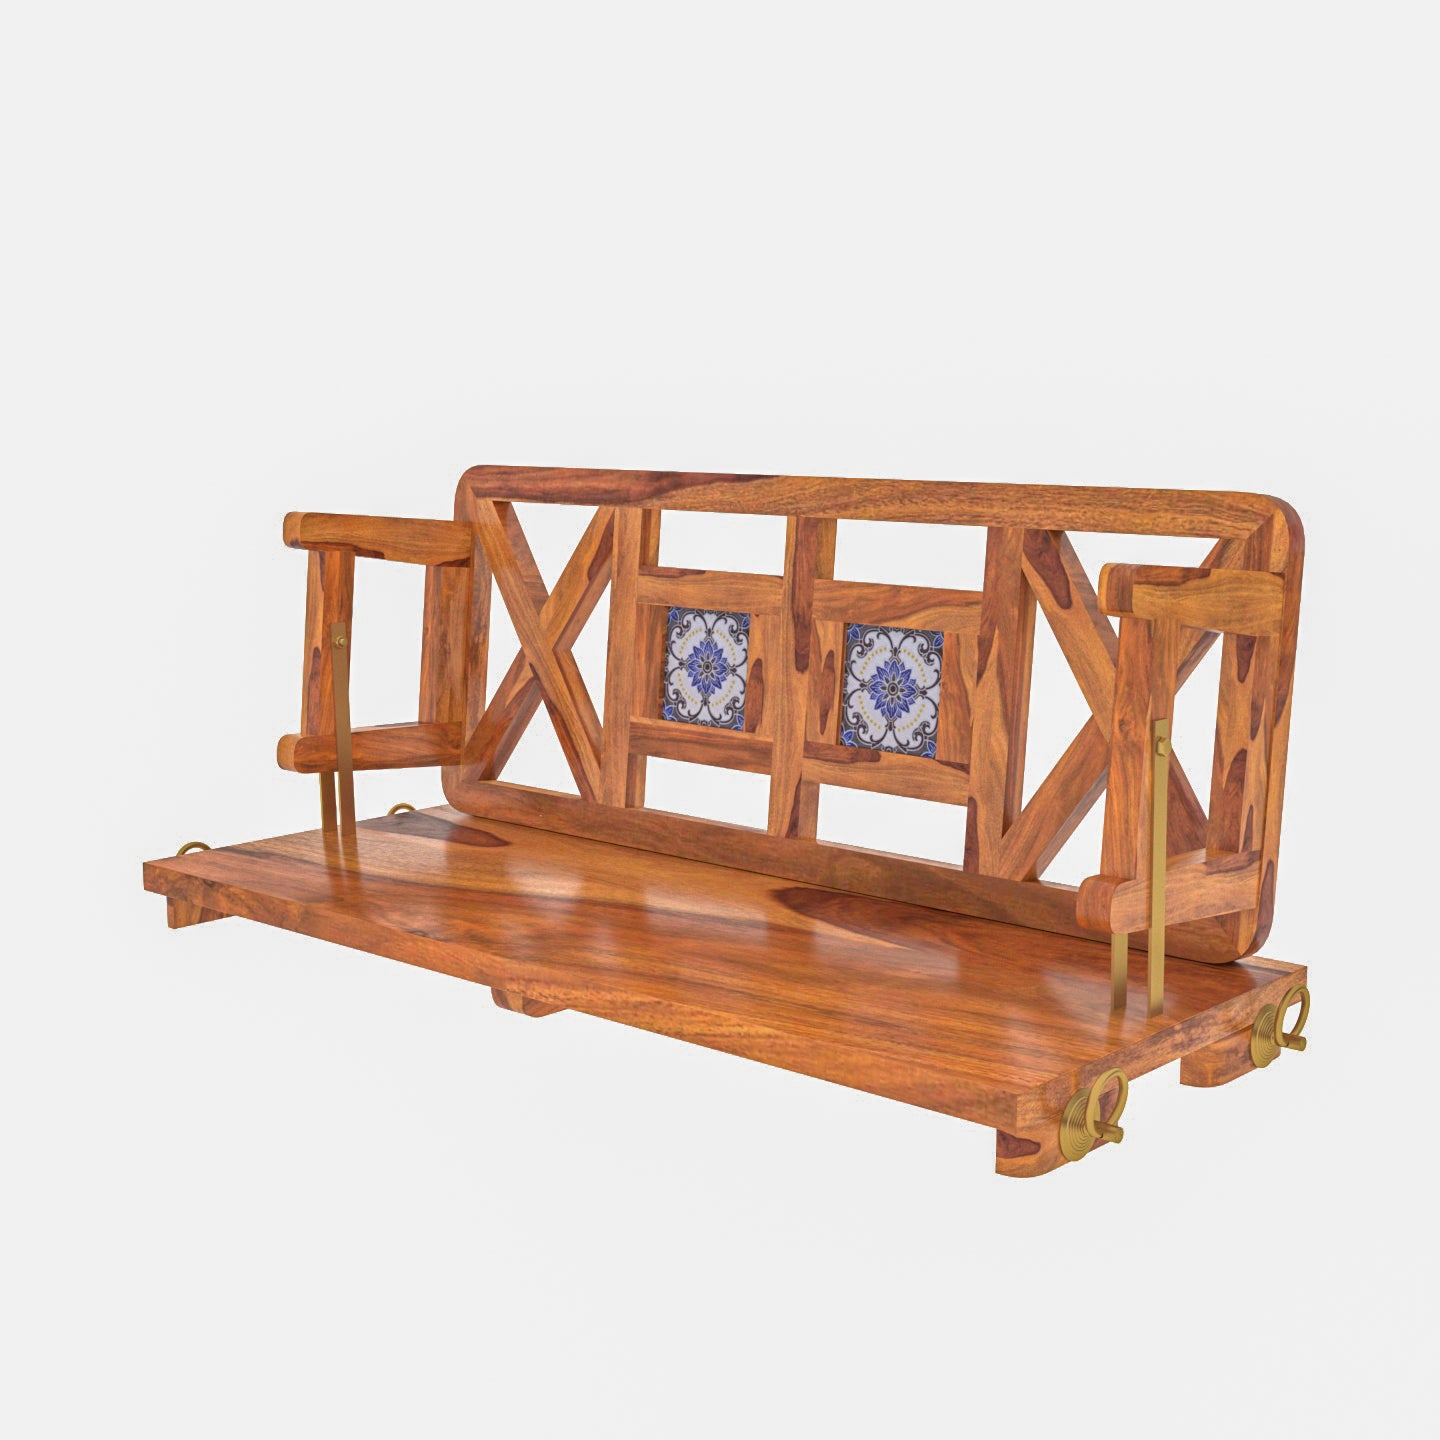 Modern Castle Style Tile Fitted Wooden Handmade Swing for Home Swing